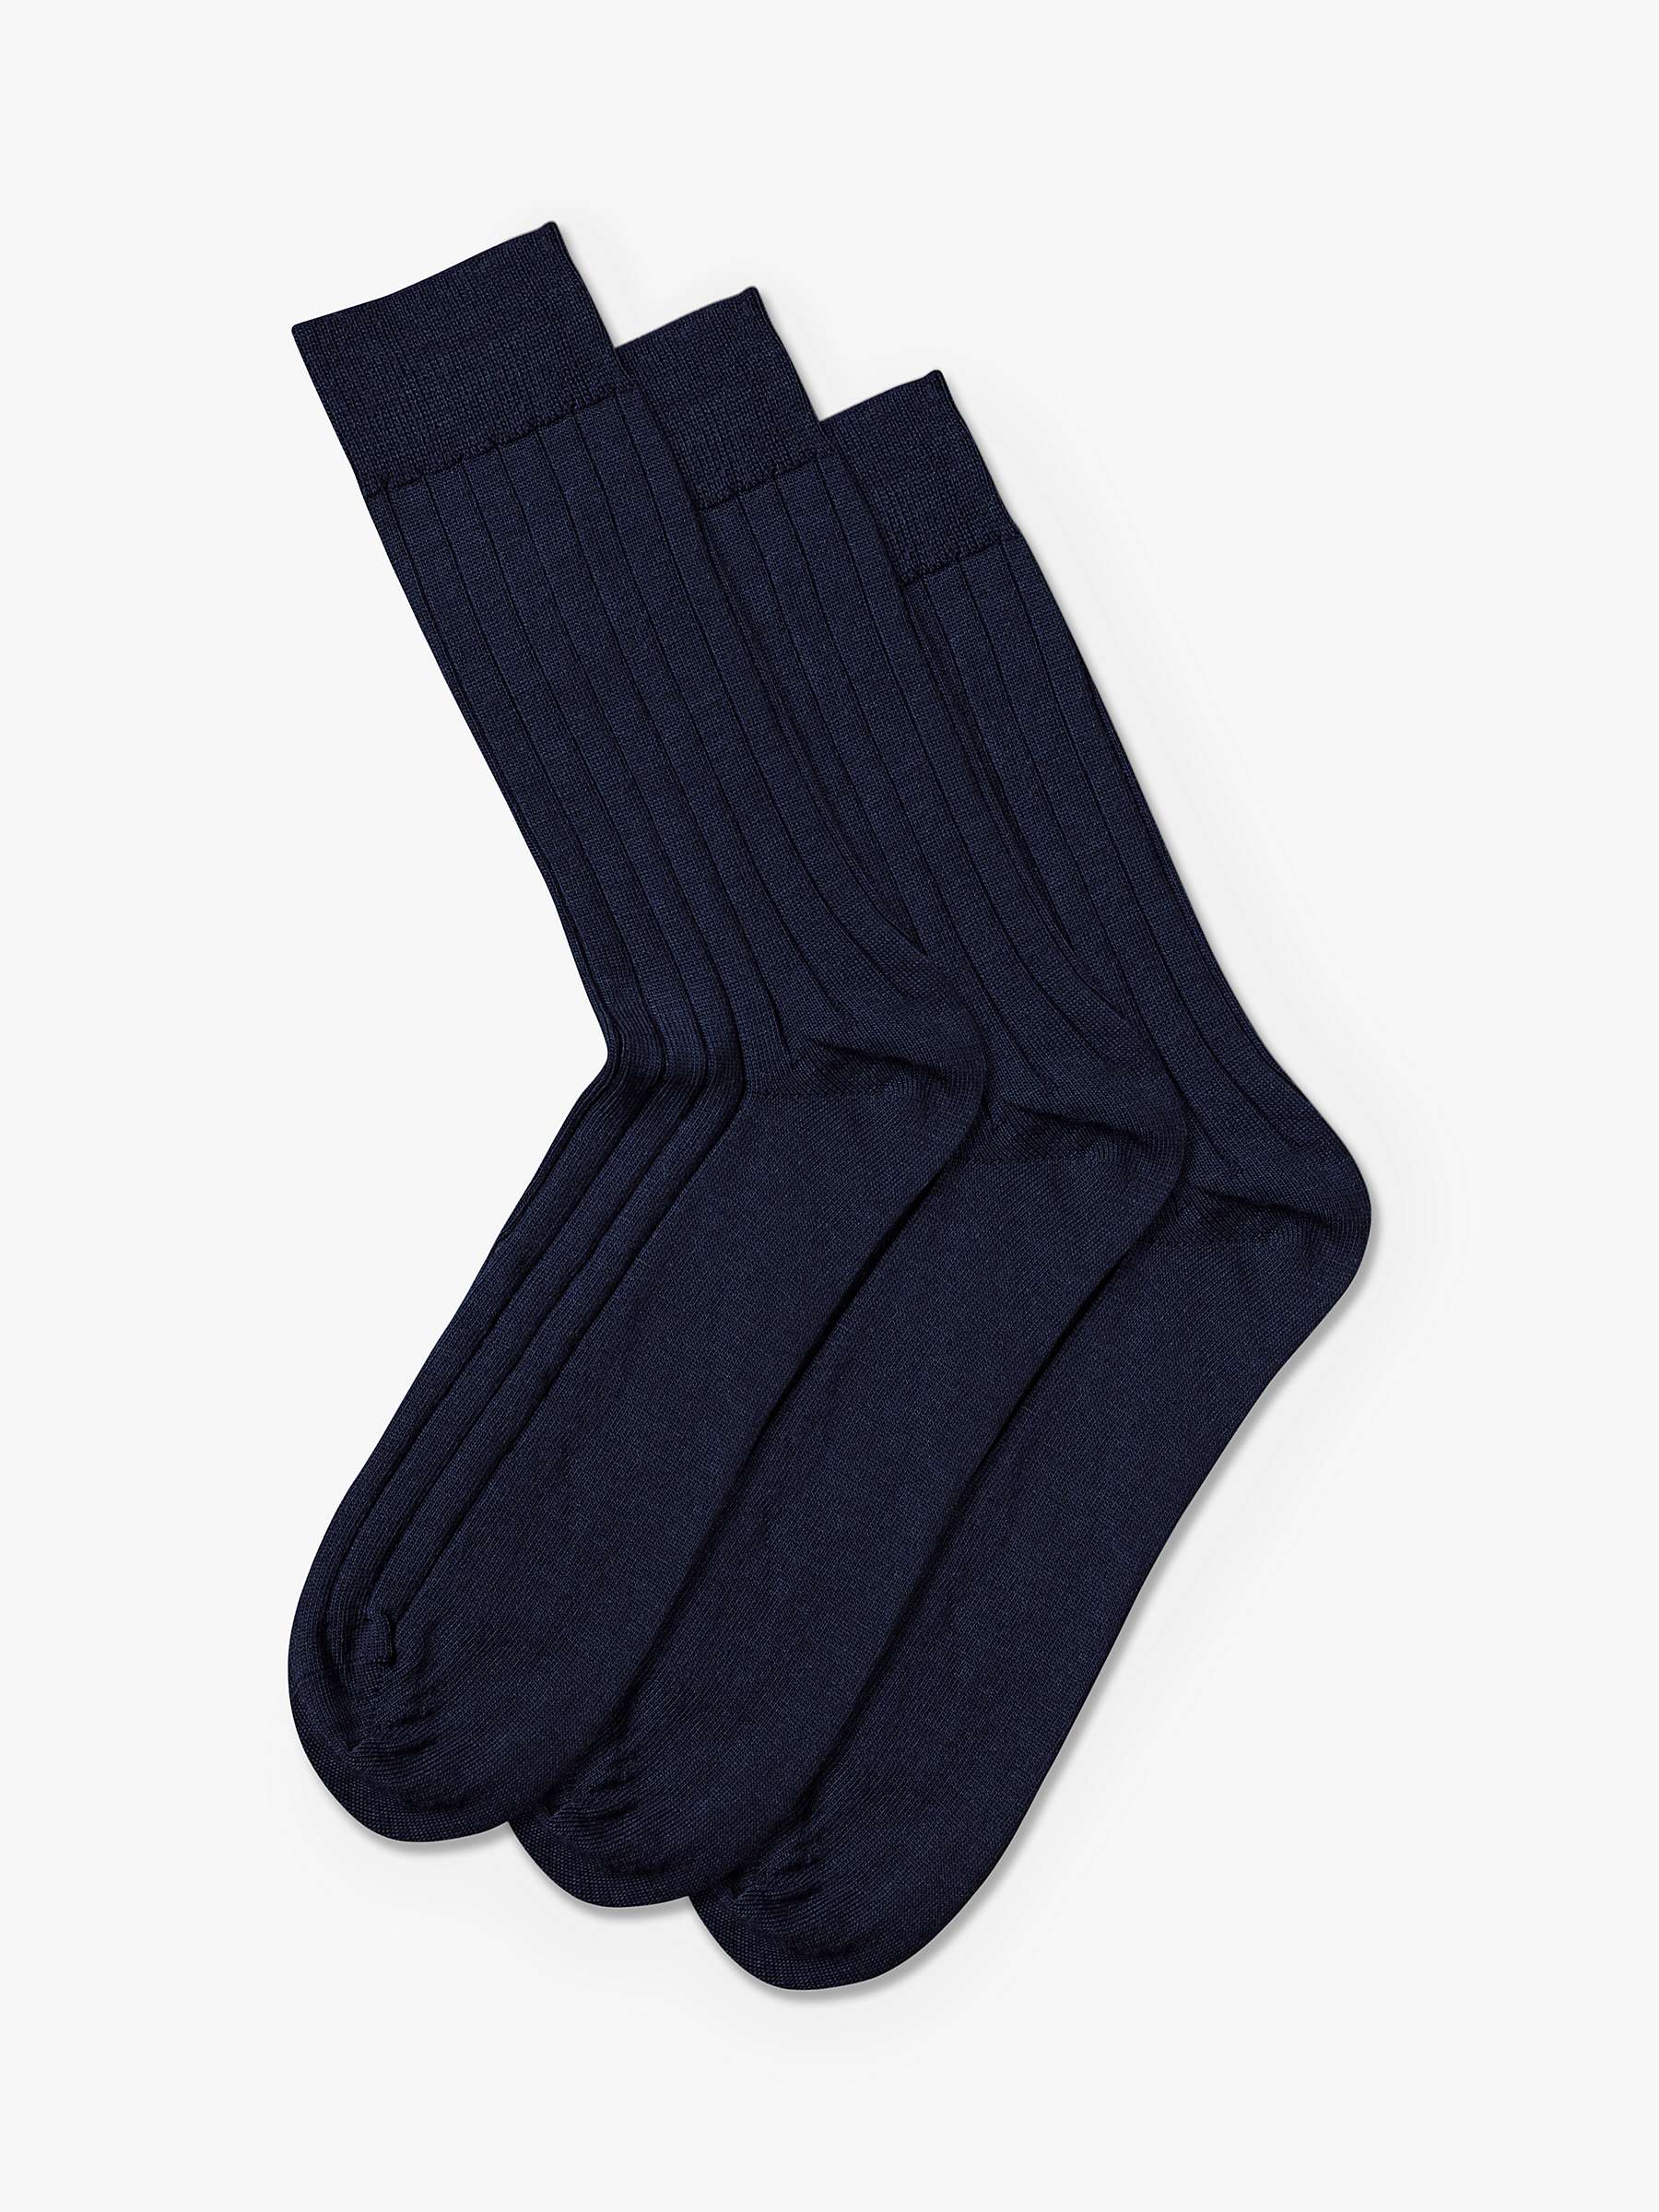 Buy Charles Tyrwhitt Wool Rich Socks, Pack of 3 Online at johnlewis.com